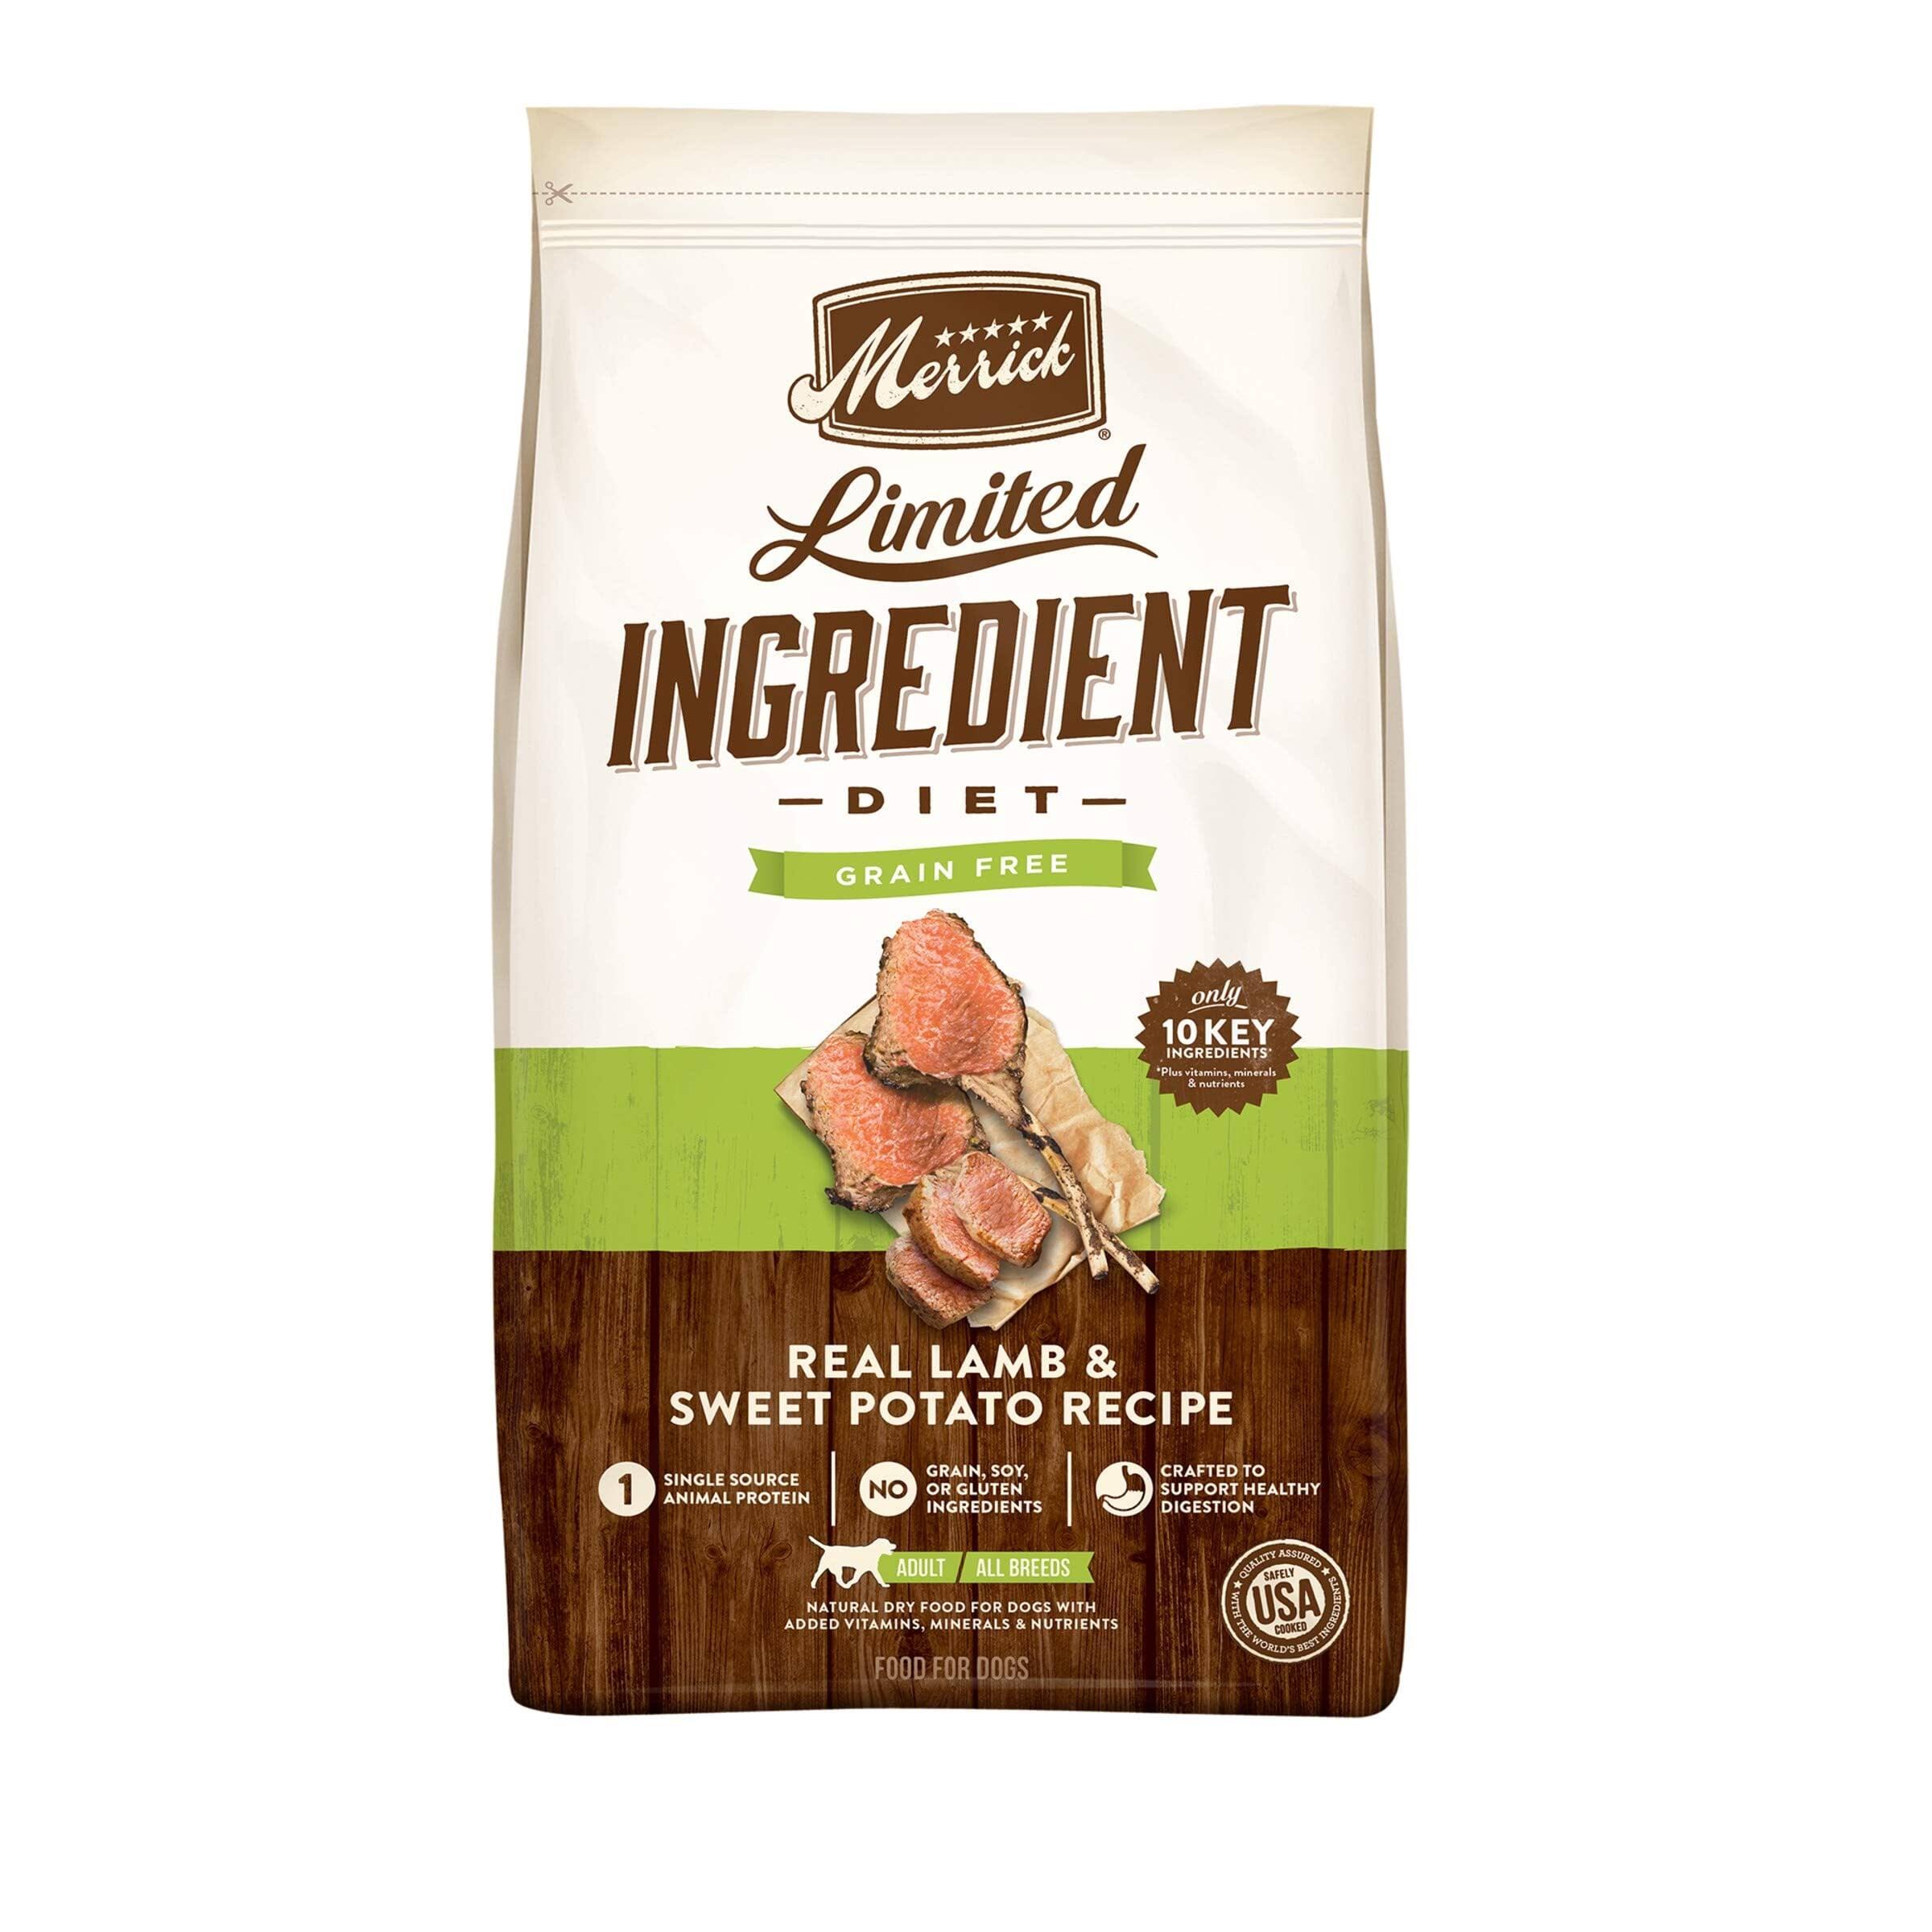 Merrick Limited Ingredient Diet Grain Free Real Lamb & Sweet Potato Recipe Dry Dog Food, 4 lbs